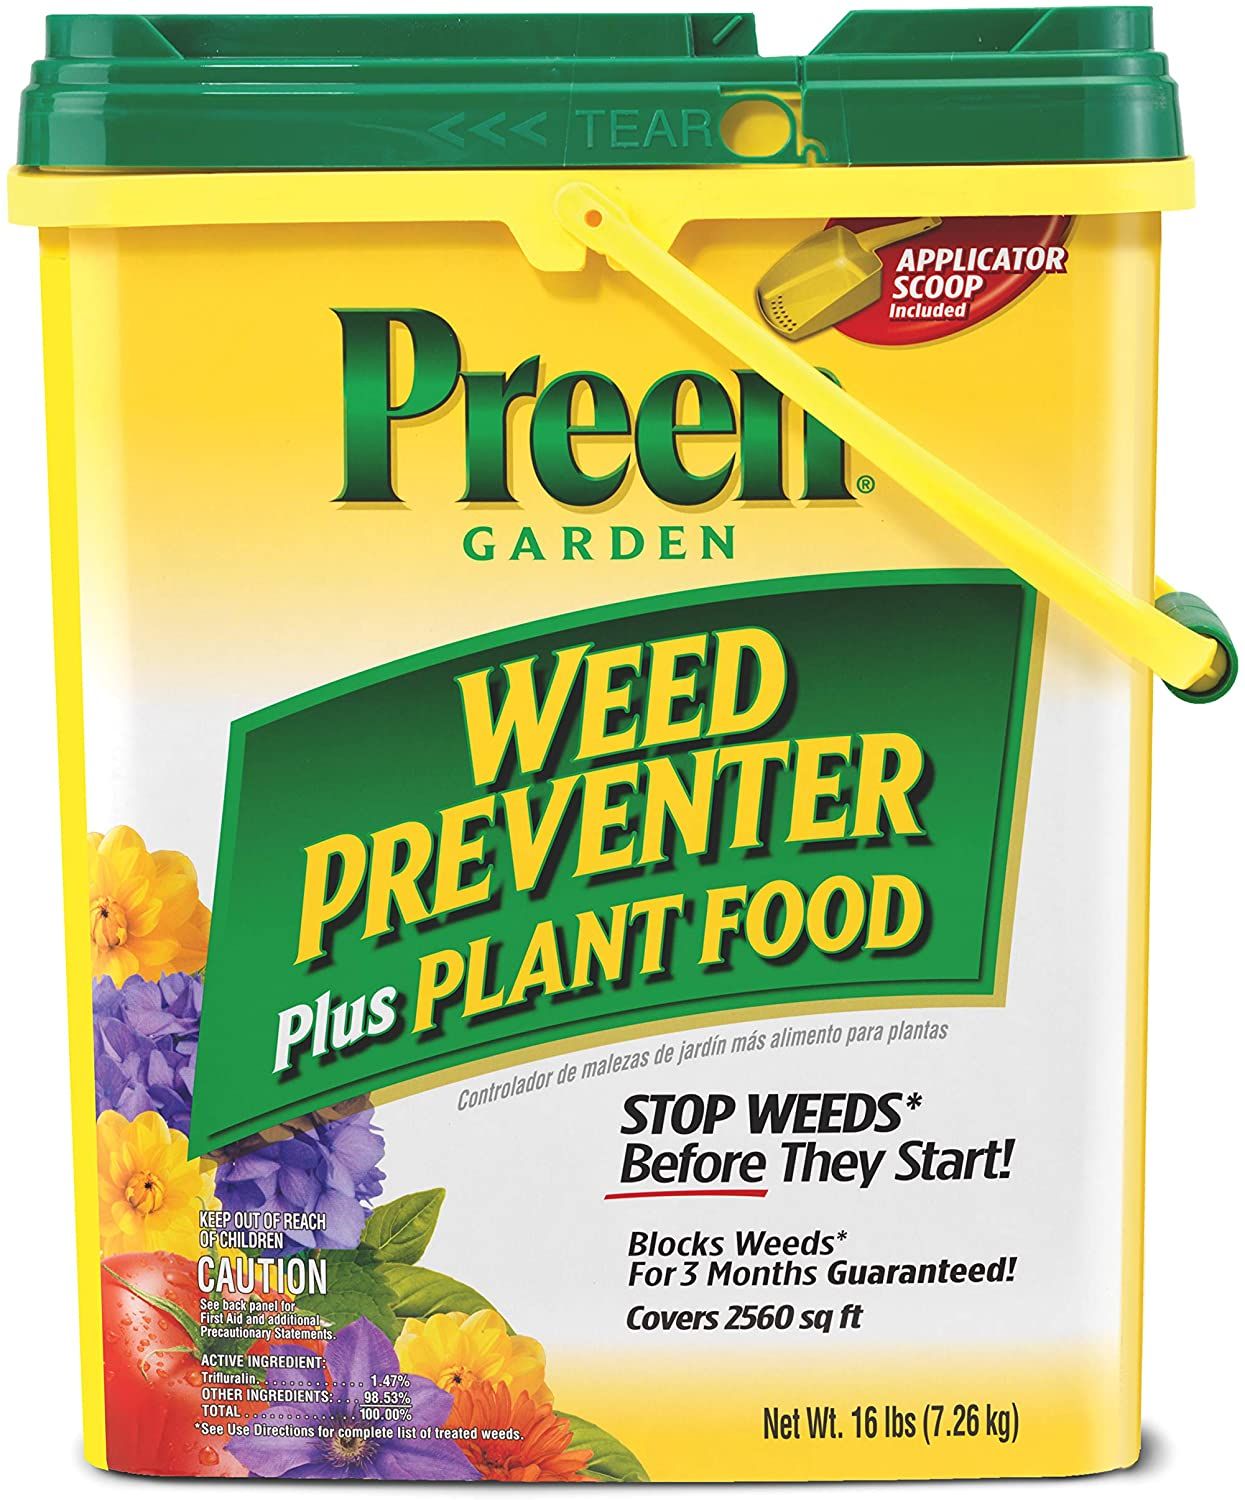 Preen Garden Weed Preventer Plus Plant Food - $$title$$